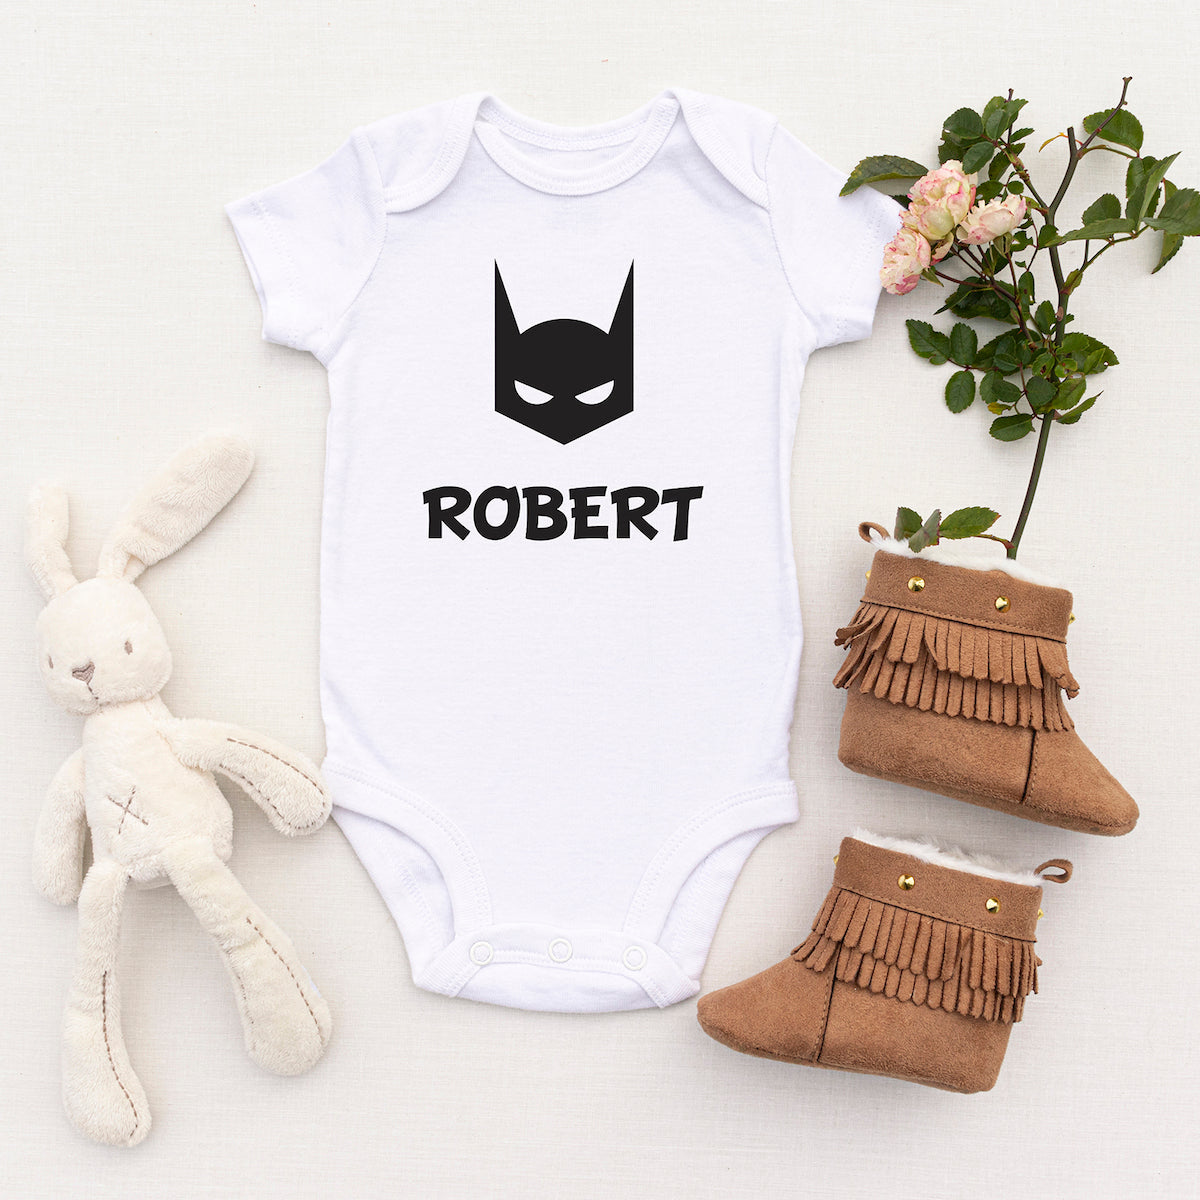 Personalised White Baby Body Suit Grow Vest - Batman